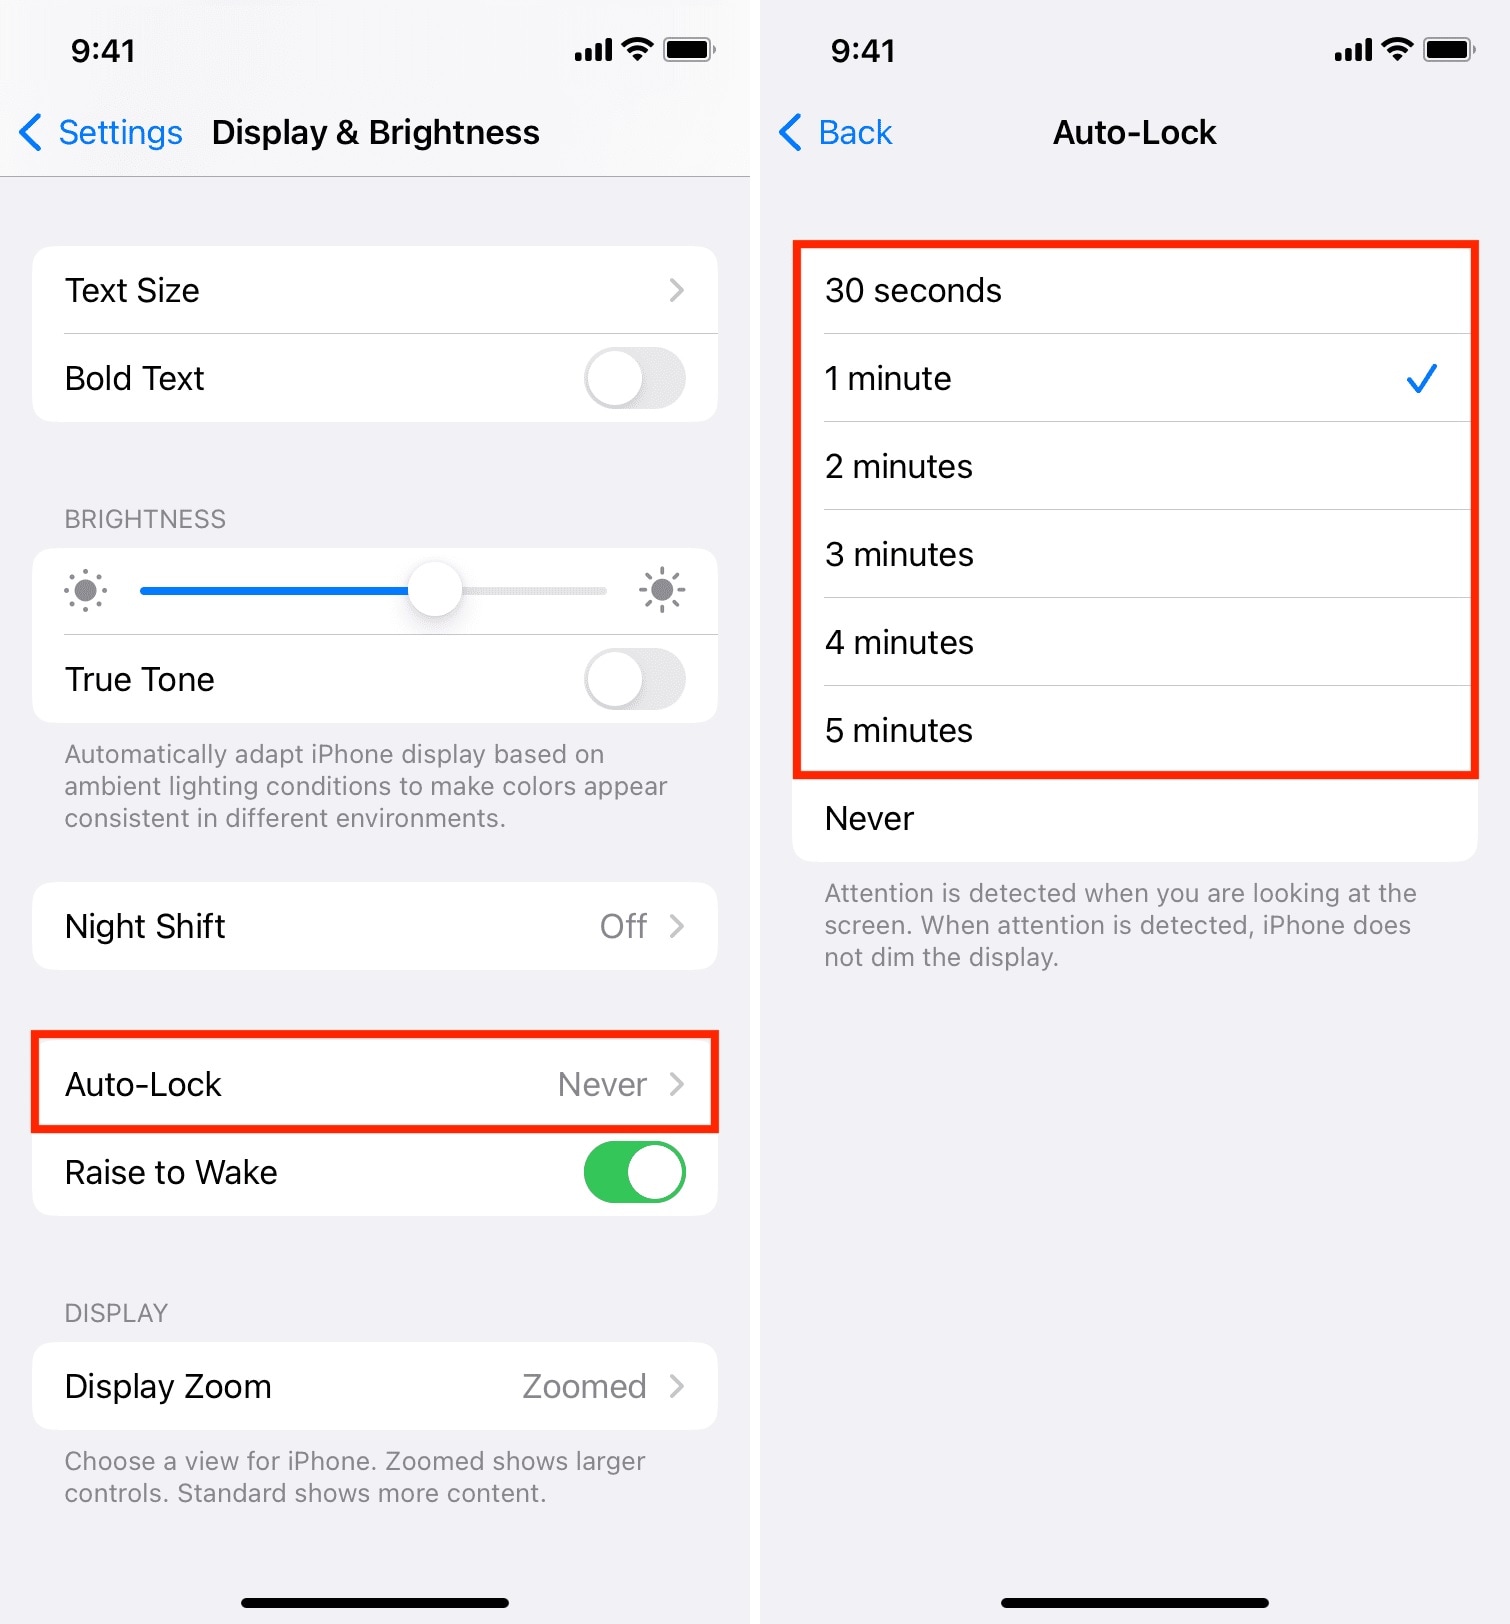 iphone auto-lock duration settings